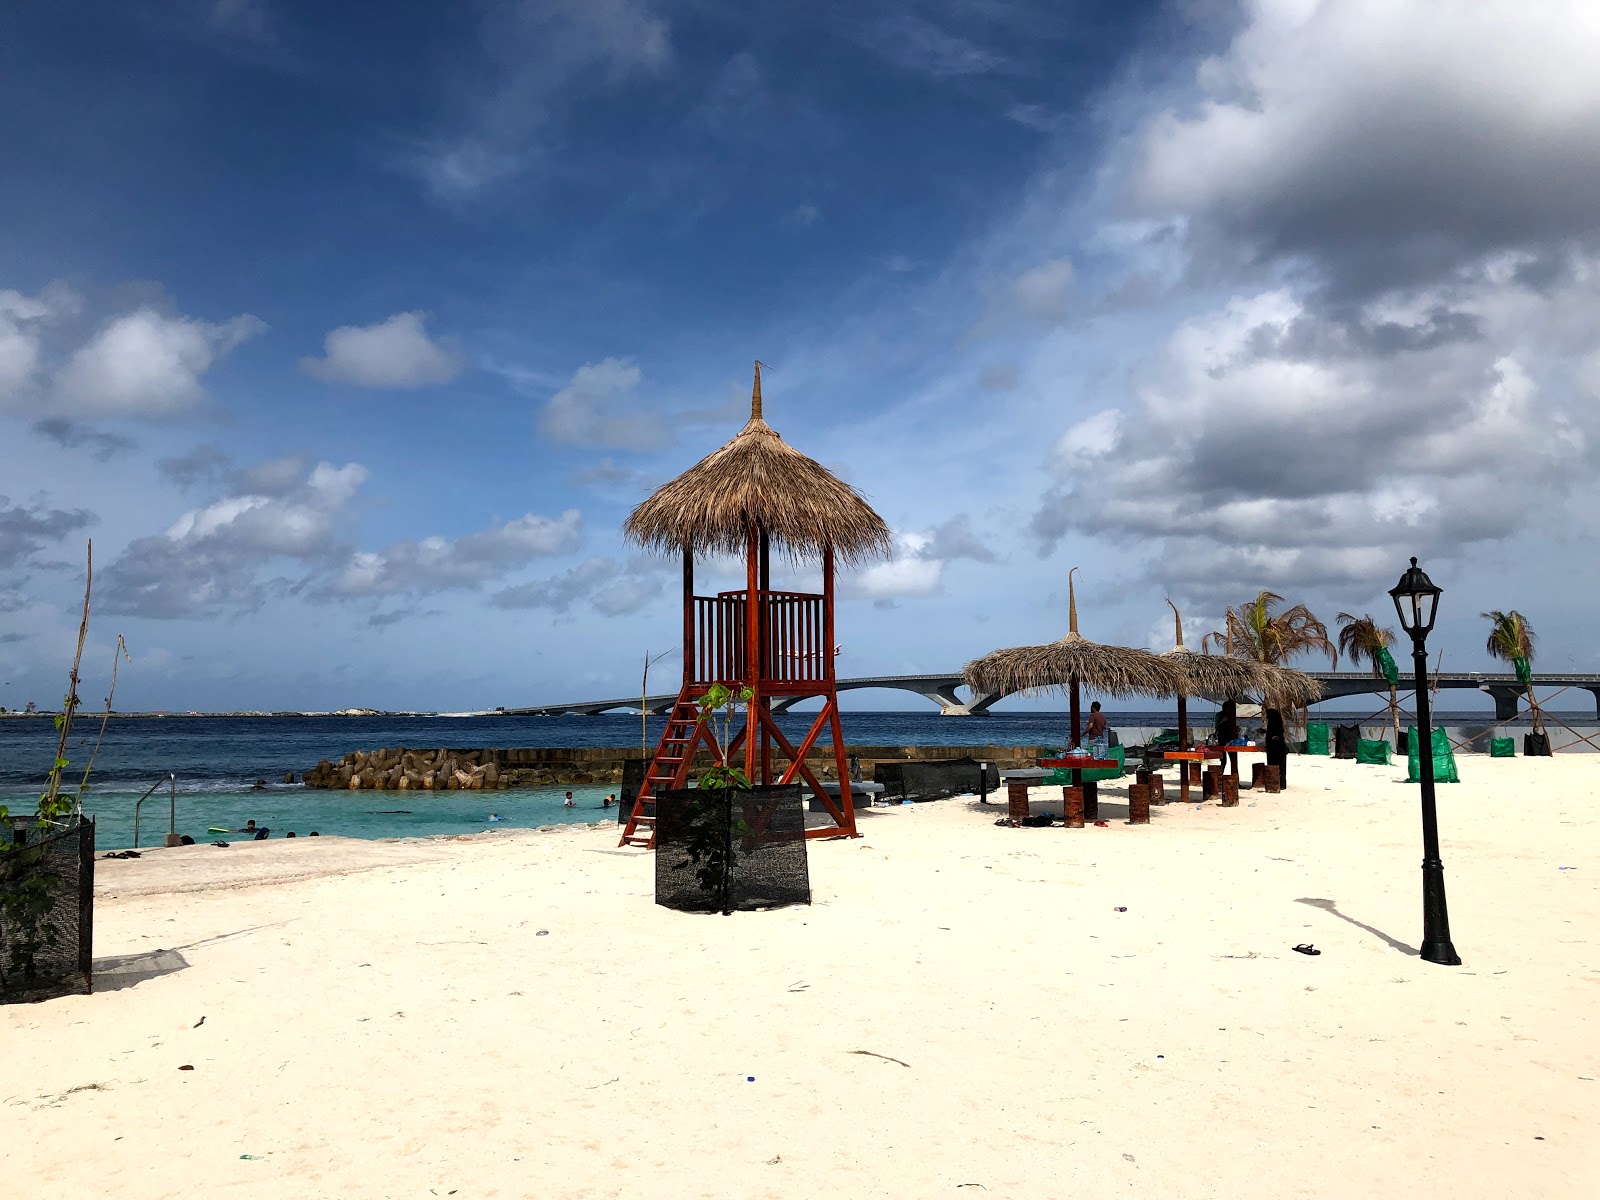 Foto de Male Beach - lugar popular entre os apreciadores de relaxamento